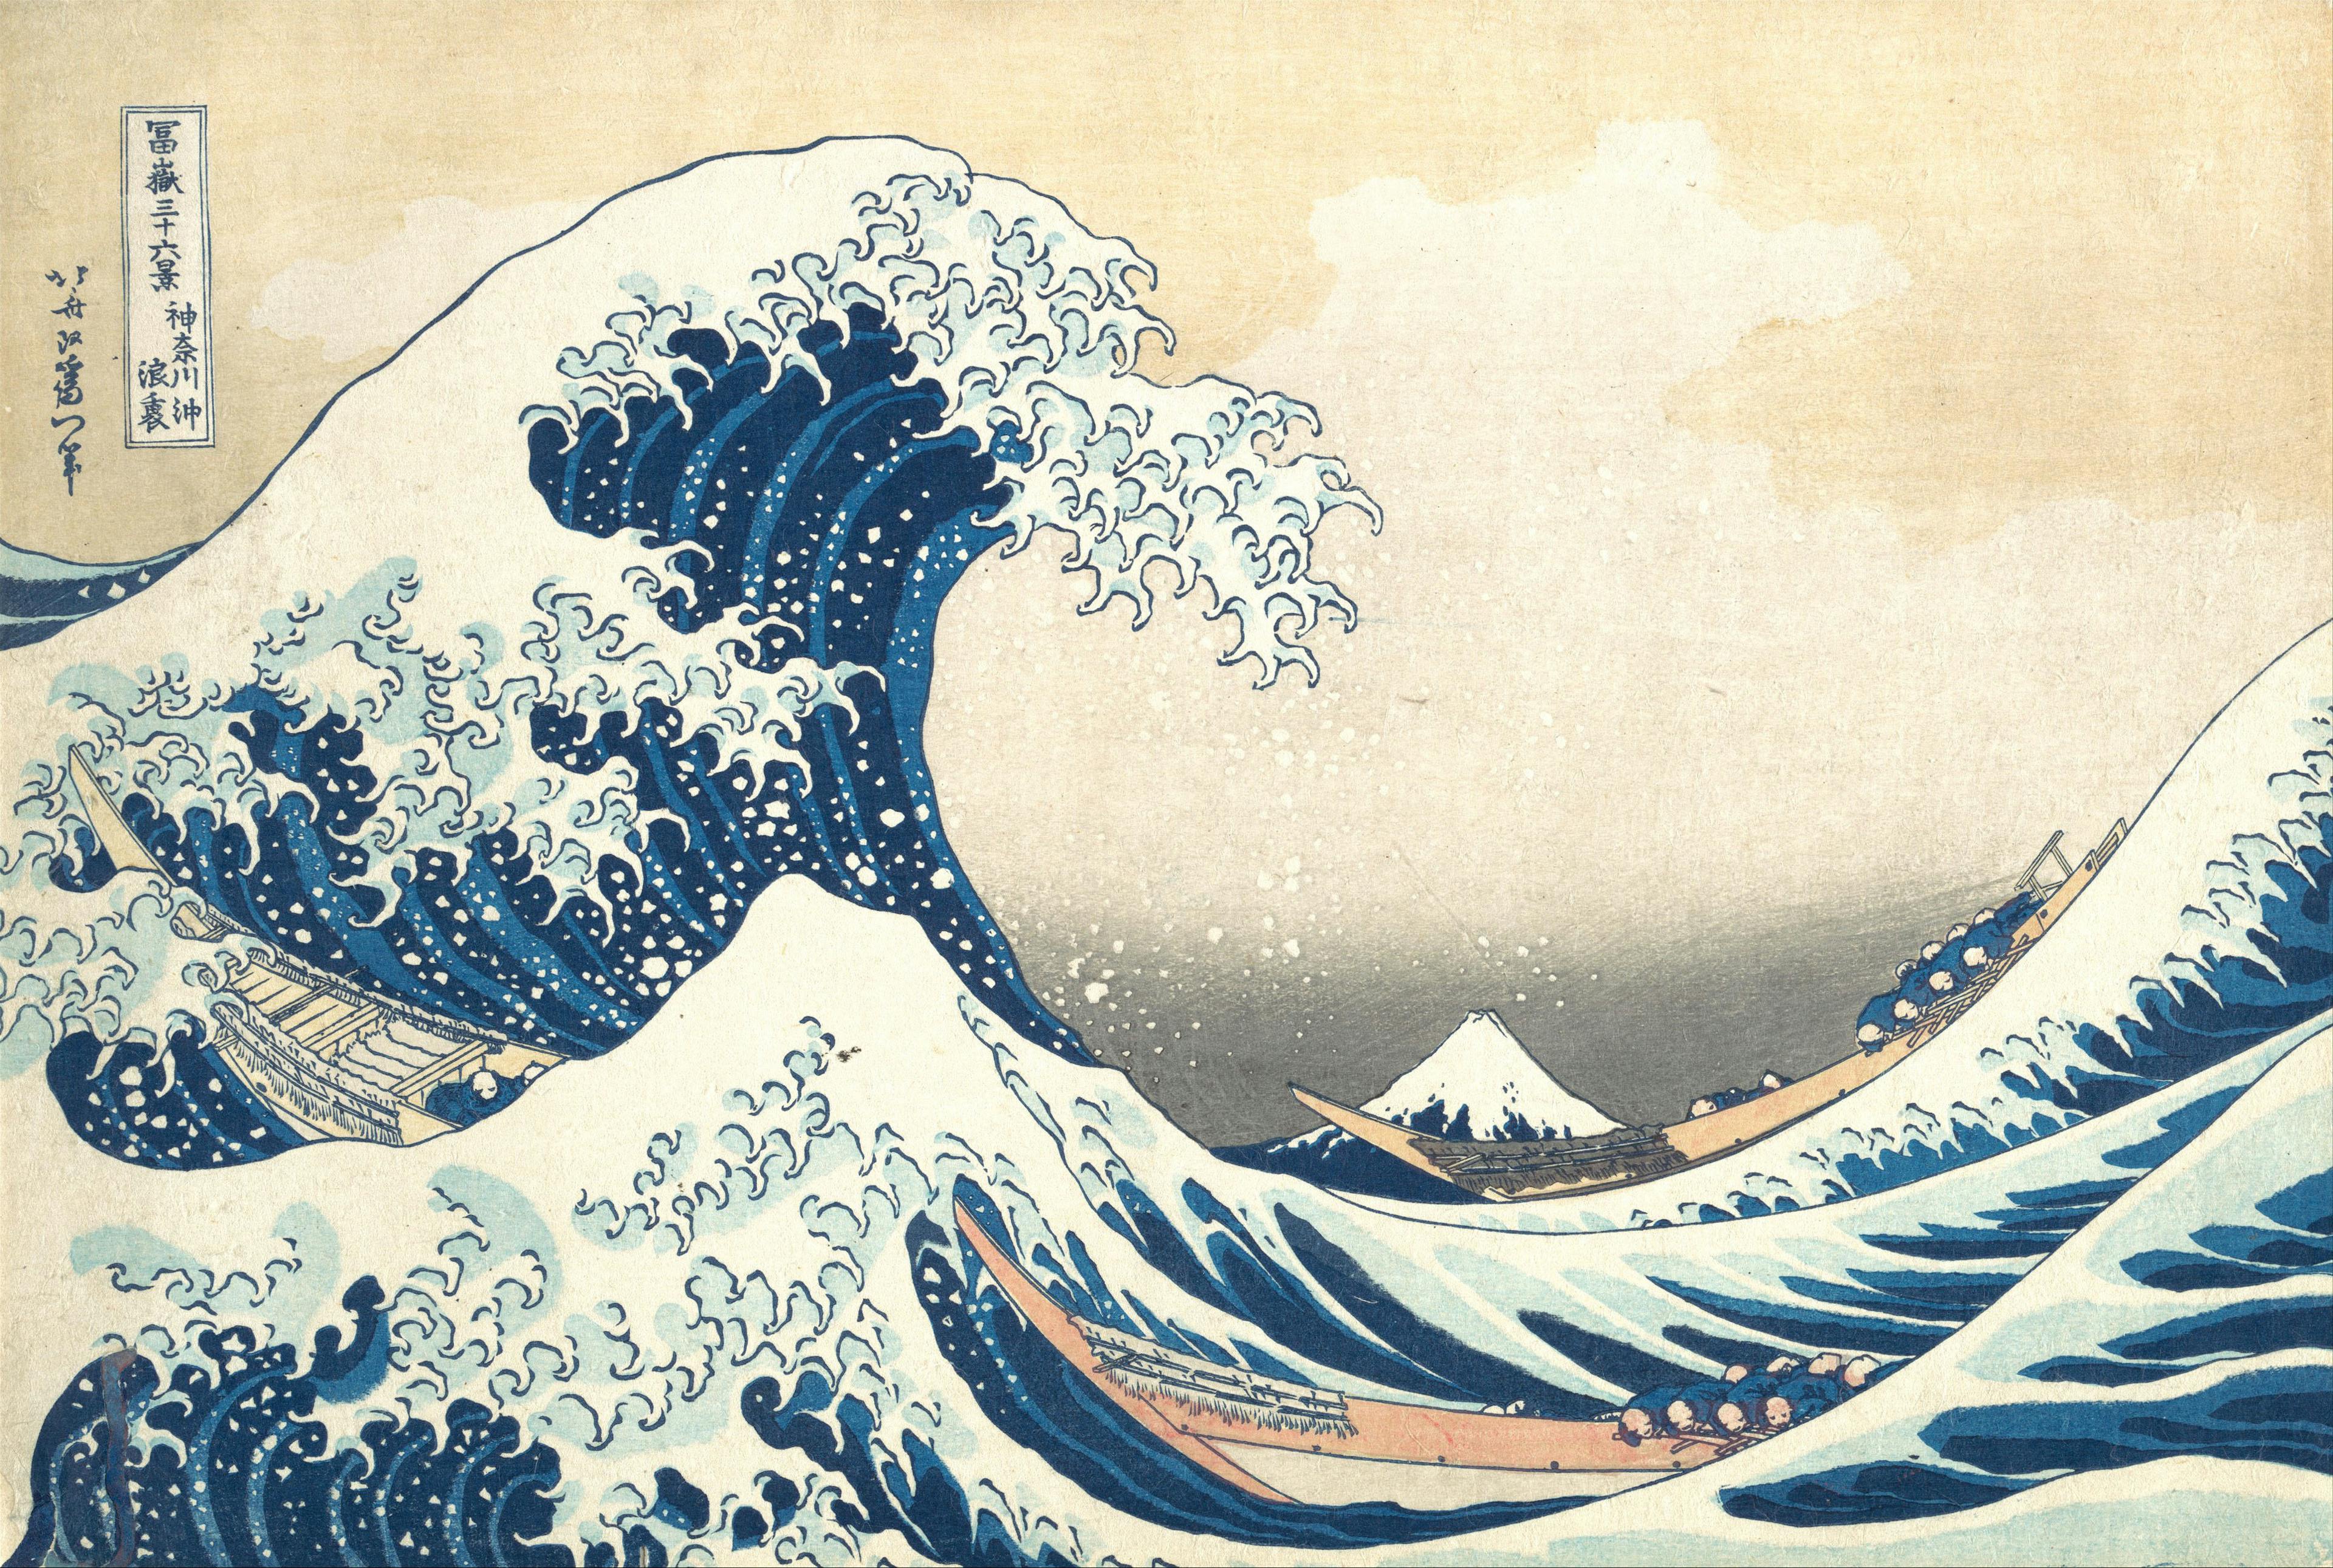 Katsushika Hokusai, “The Great Wave off Kanagawa”, 1830–1832 CE, Wikipedia, public domain.[15]